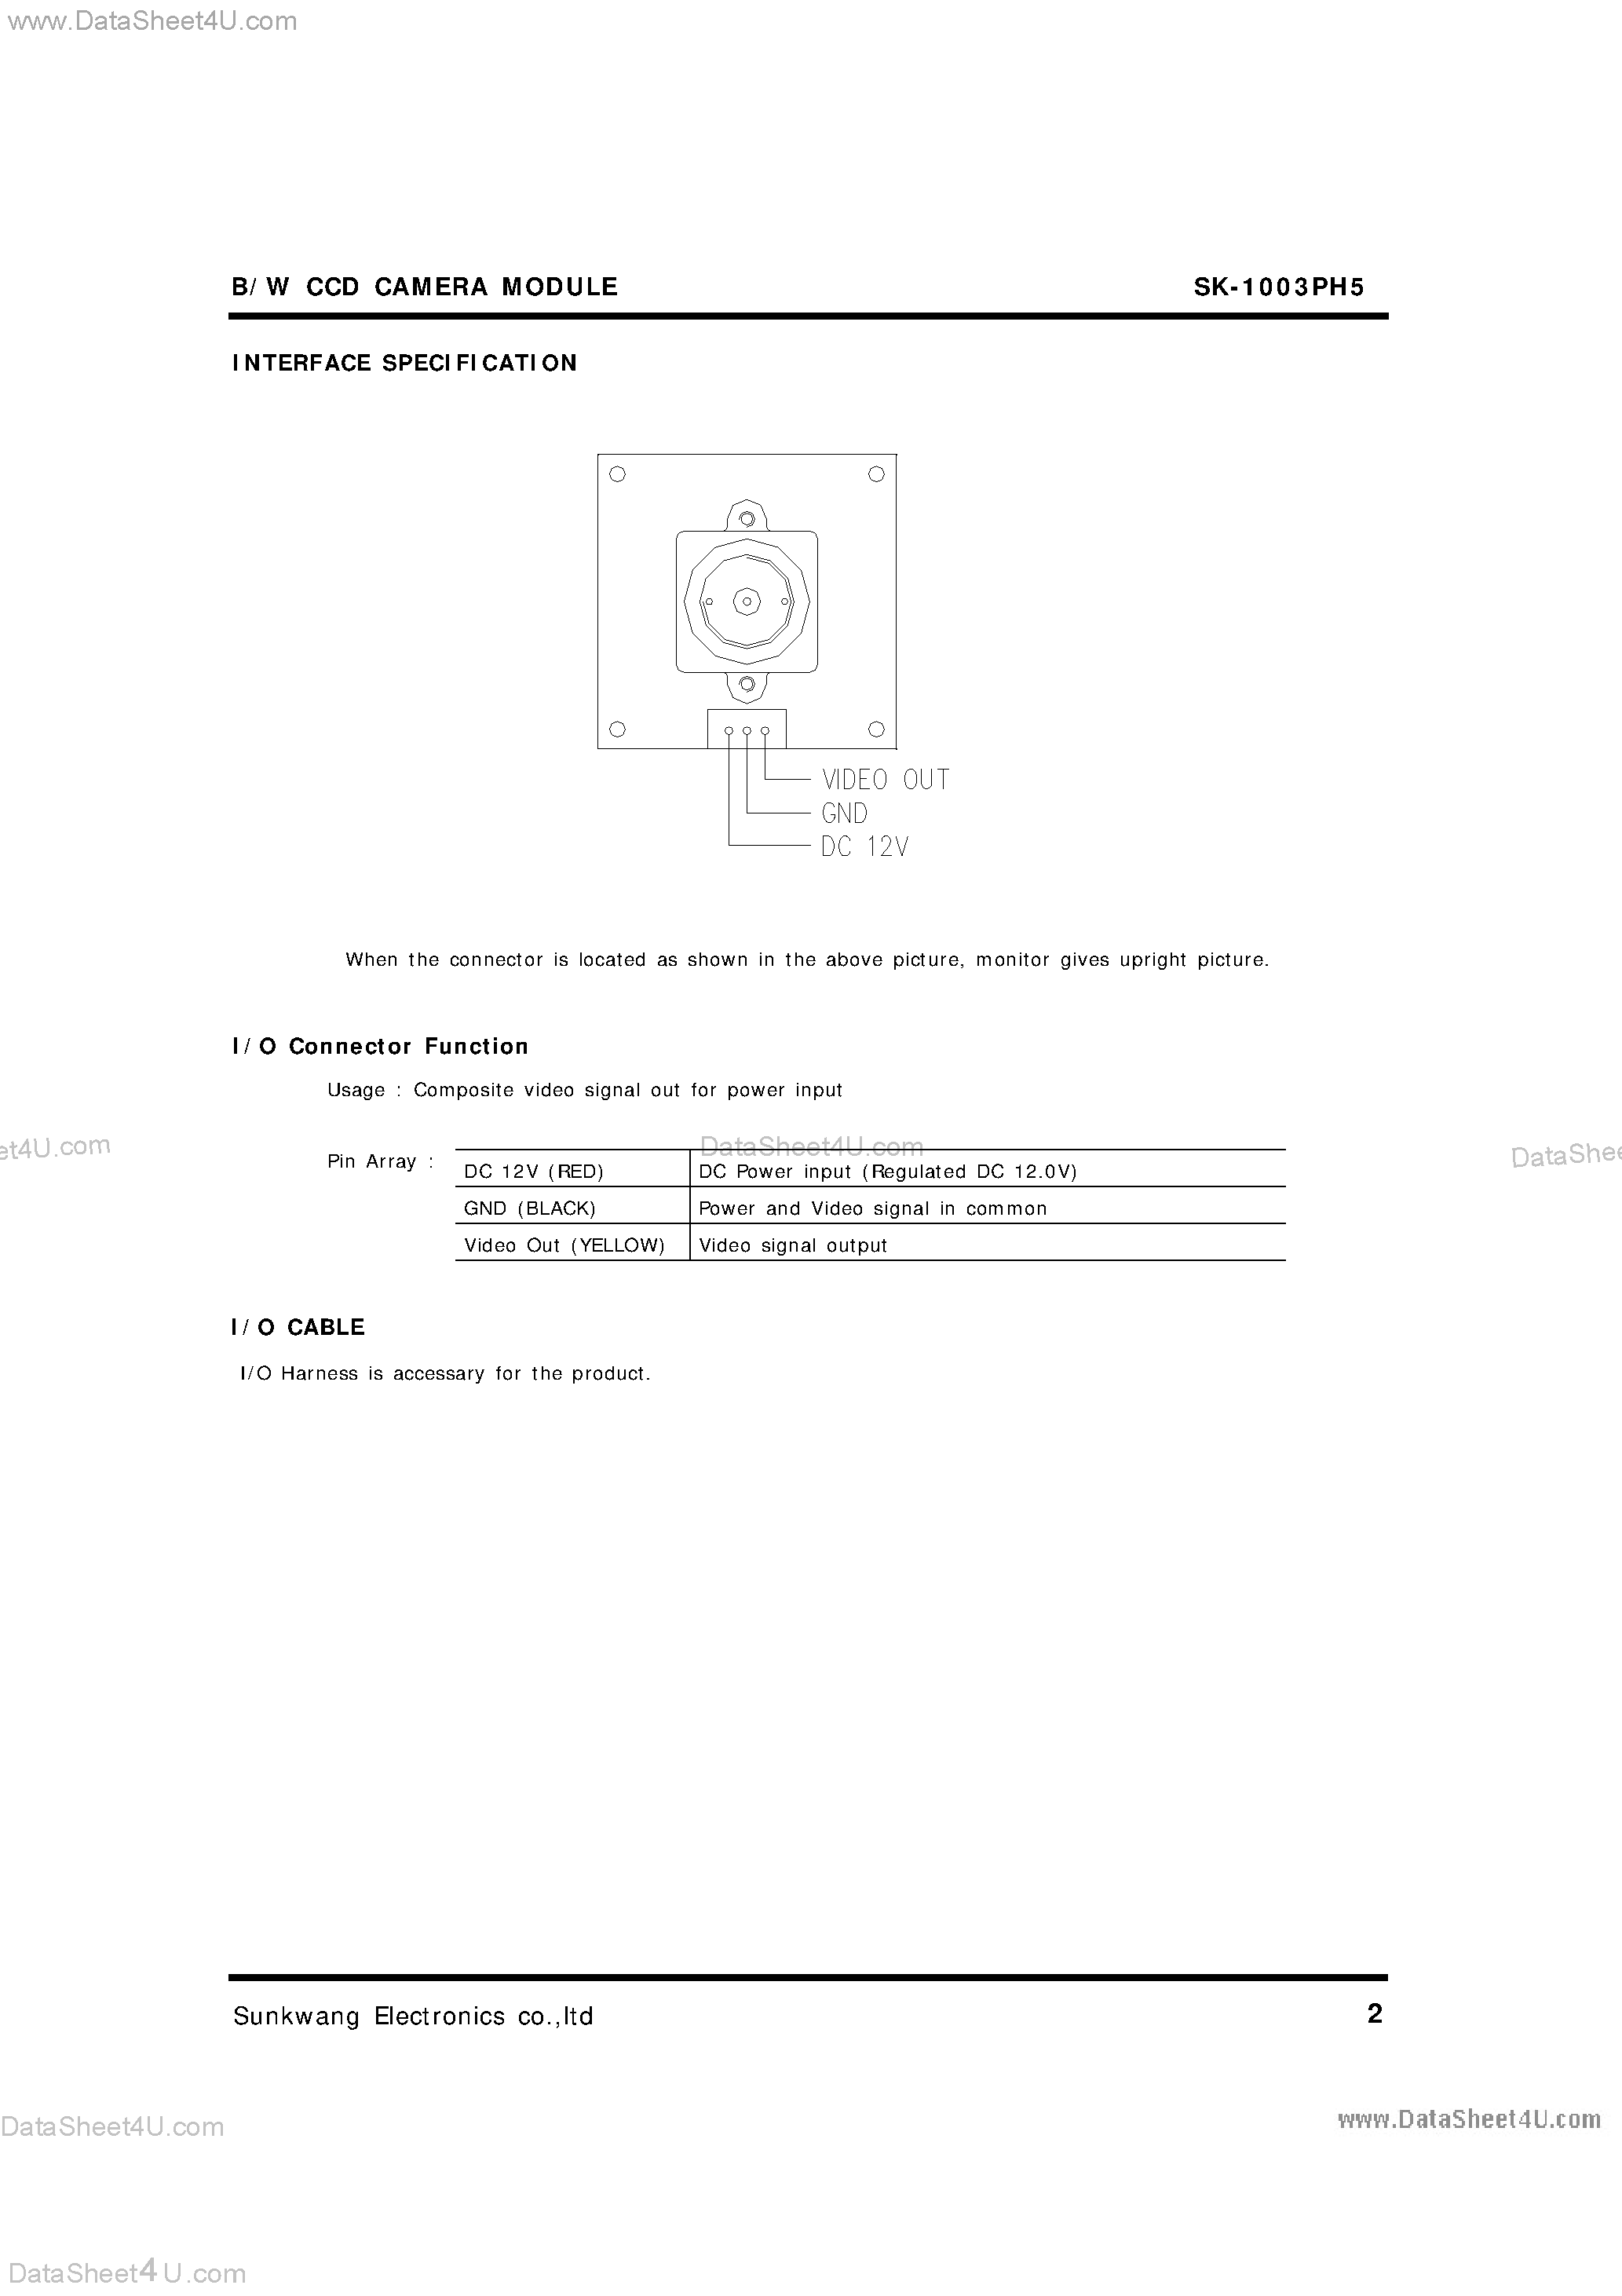 Даташит SK-1003PH5 - B/W CCD Camera Module страница 2